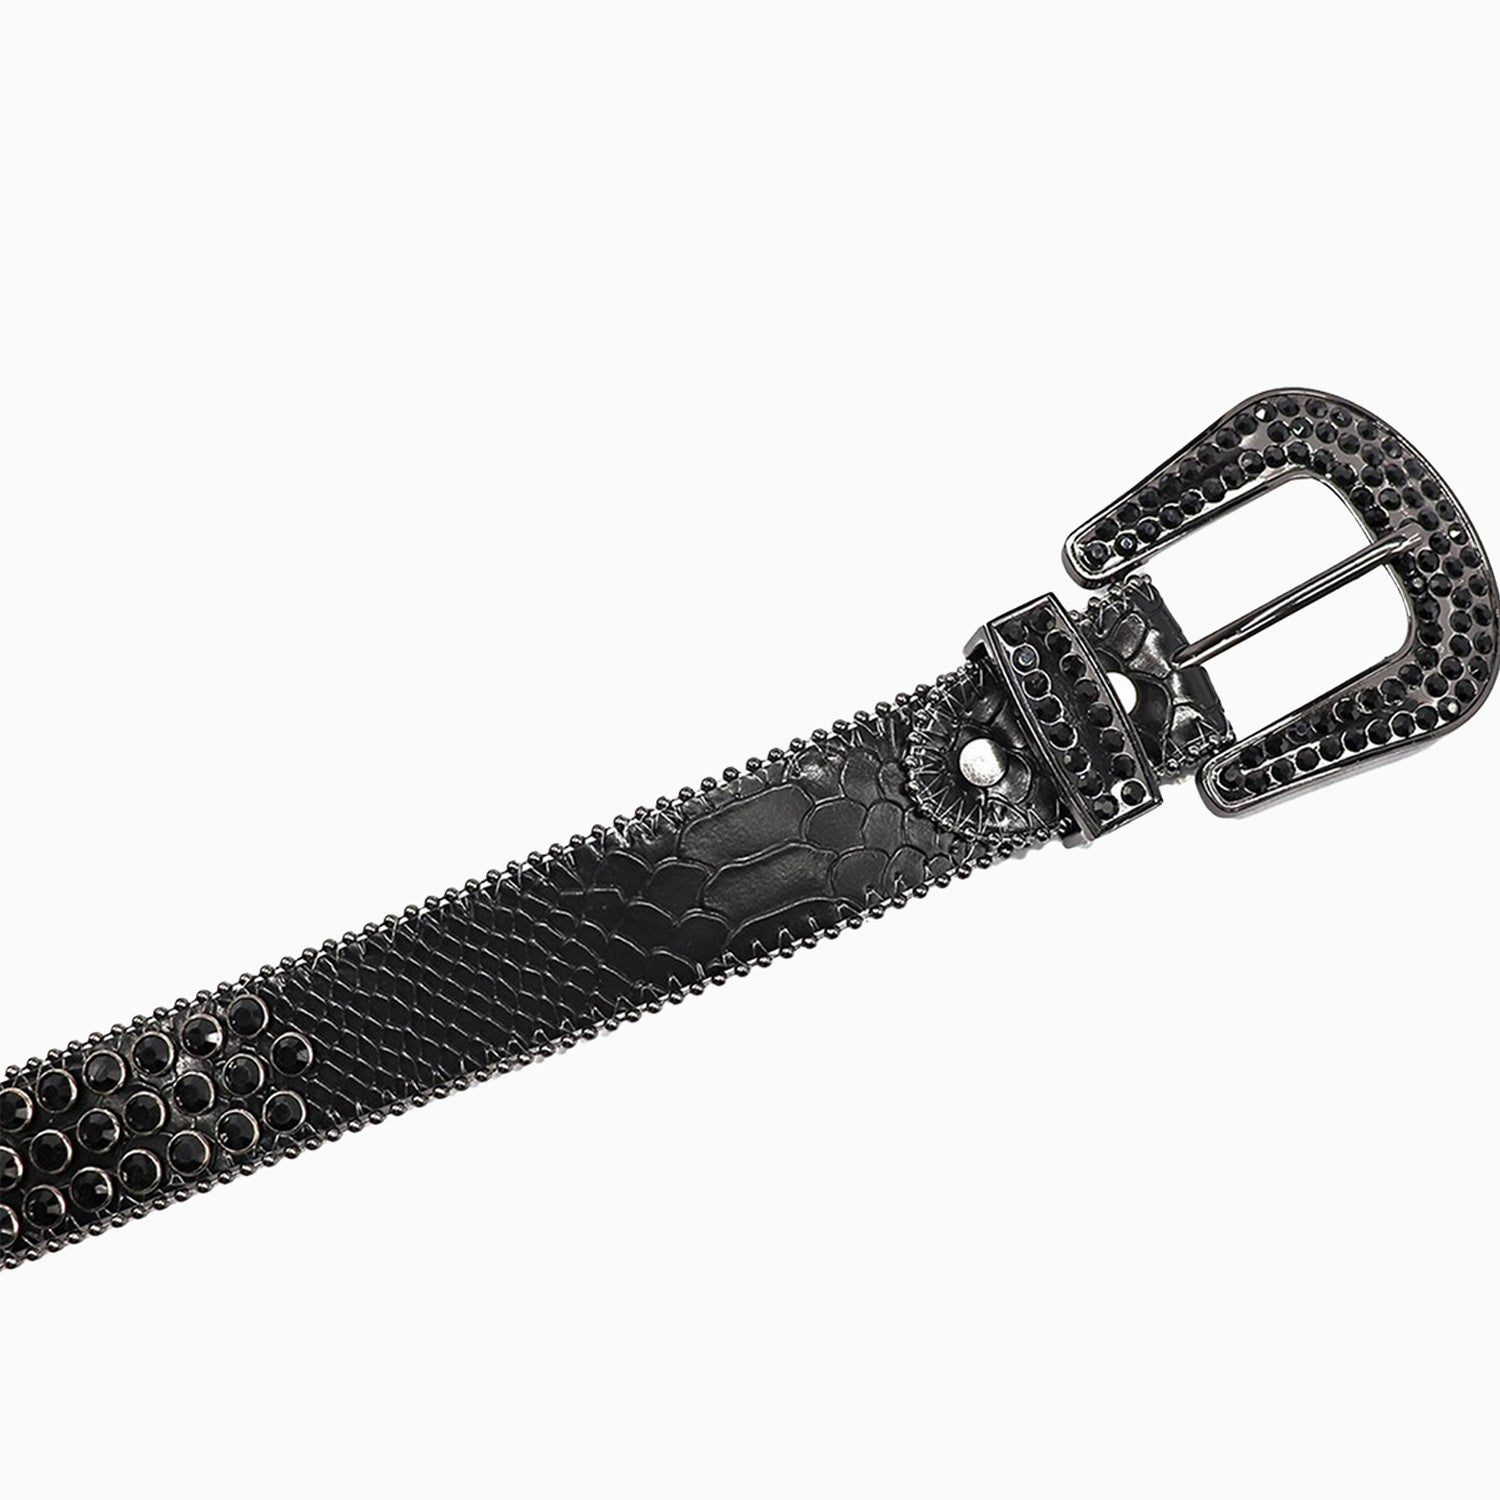 dna-premium-dna-belt-black-alligator-skin-with-black-stones-dna-77